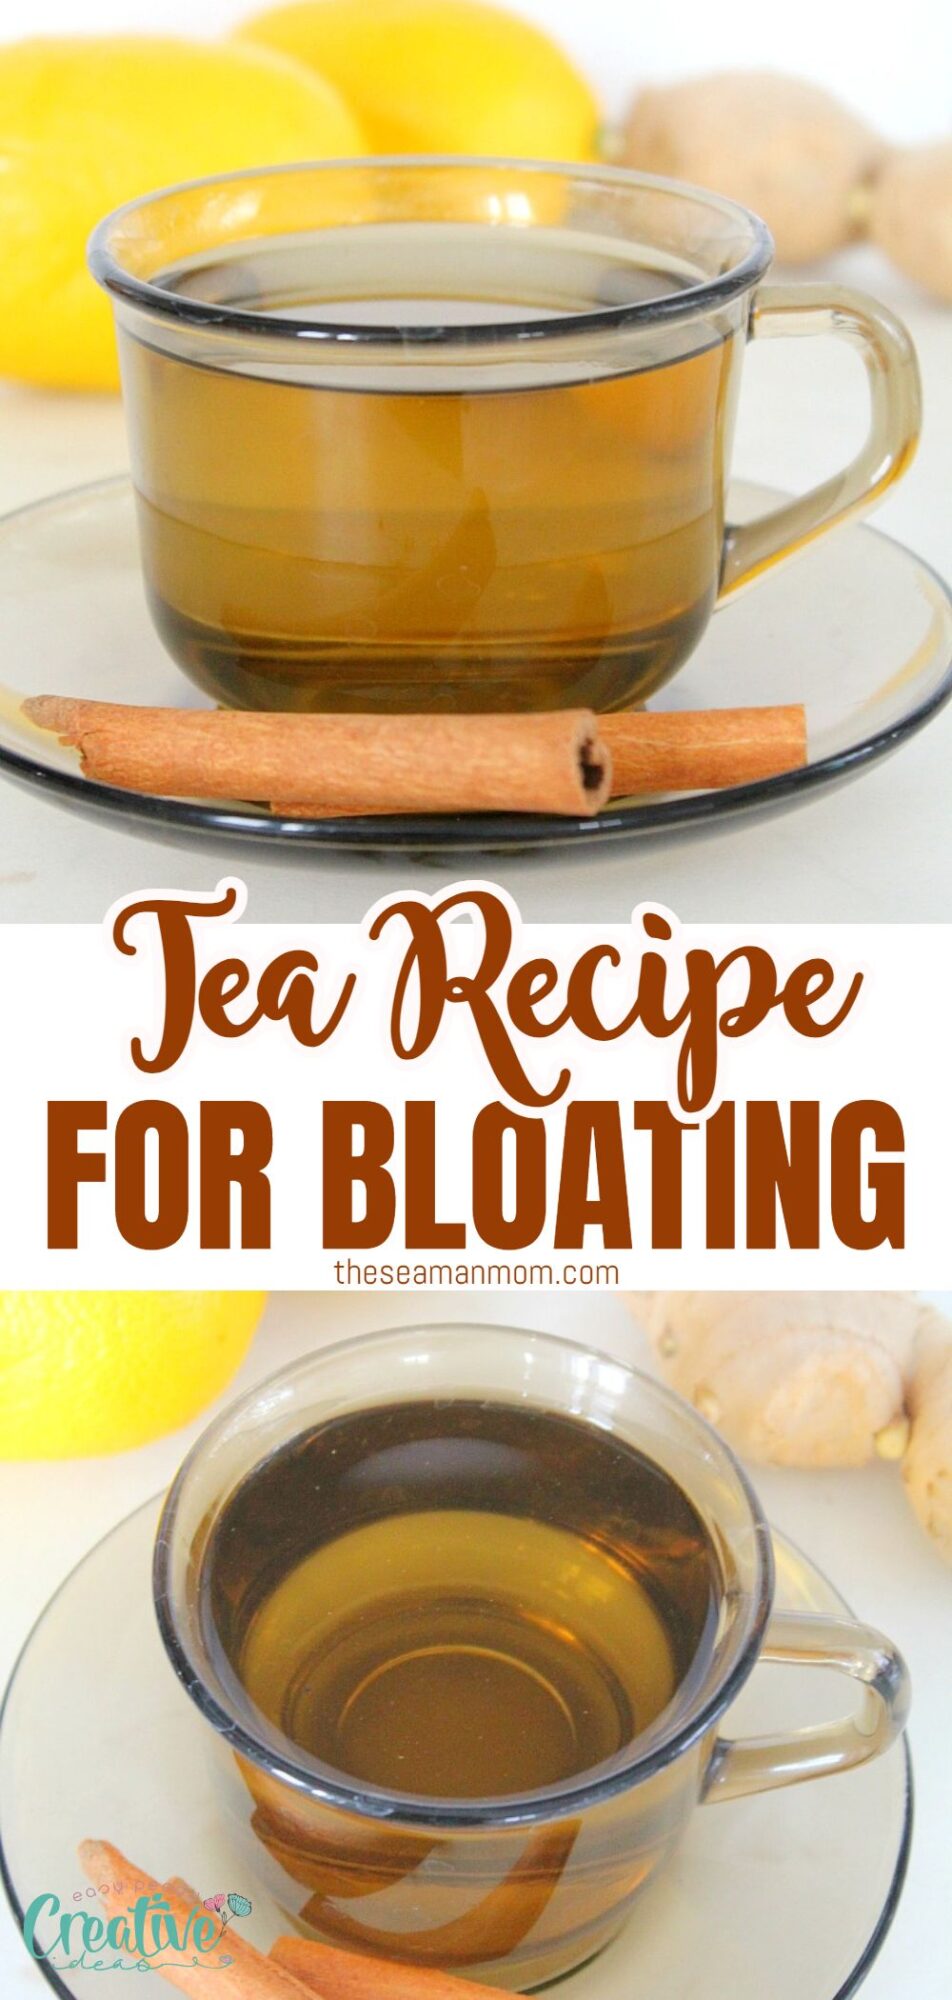 Tea for bloating